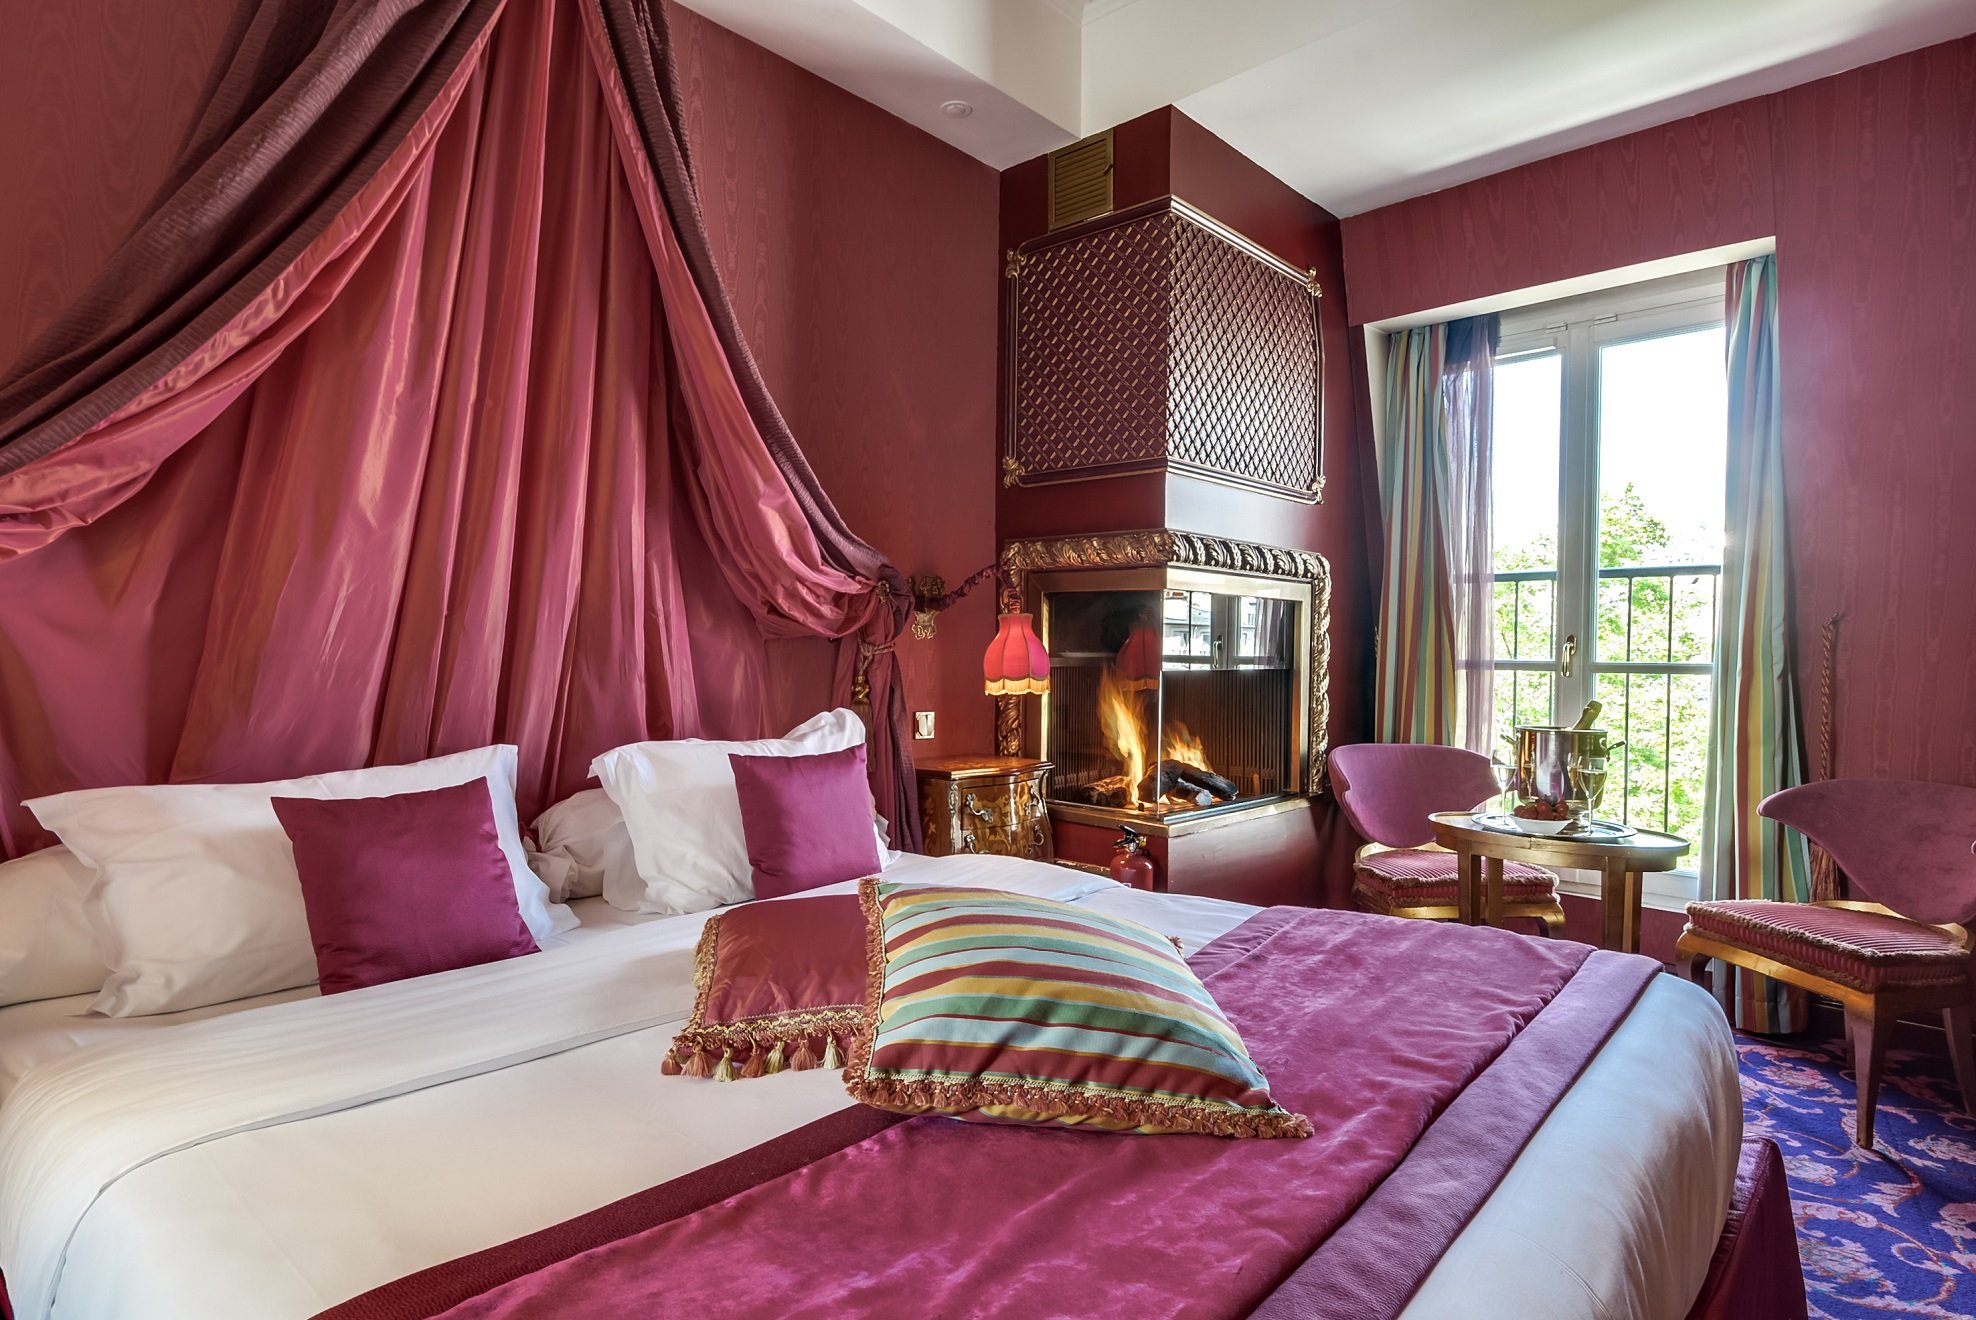 49/Chambres/Junior Suite/Junior Suite - hotel - 4 - etoiles- Paris - Montmartre - Romantique - Luxe.jpg